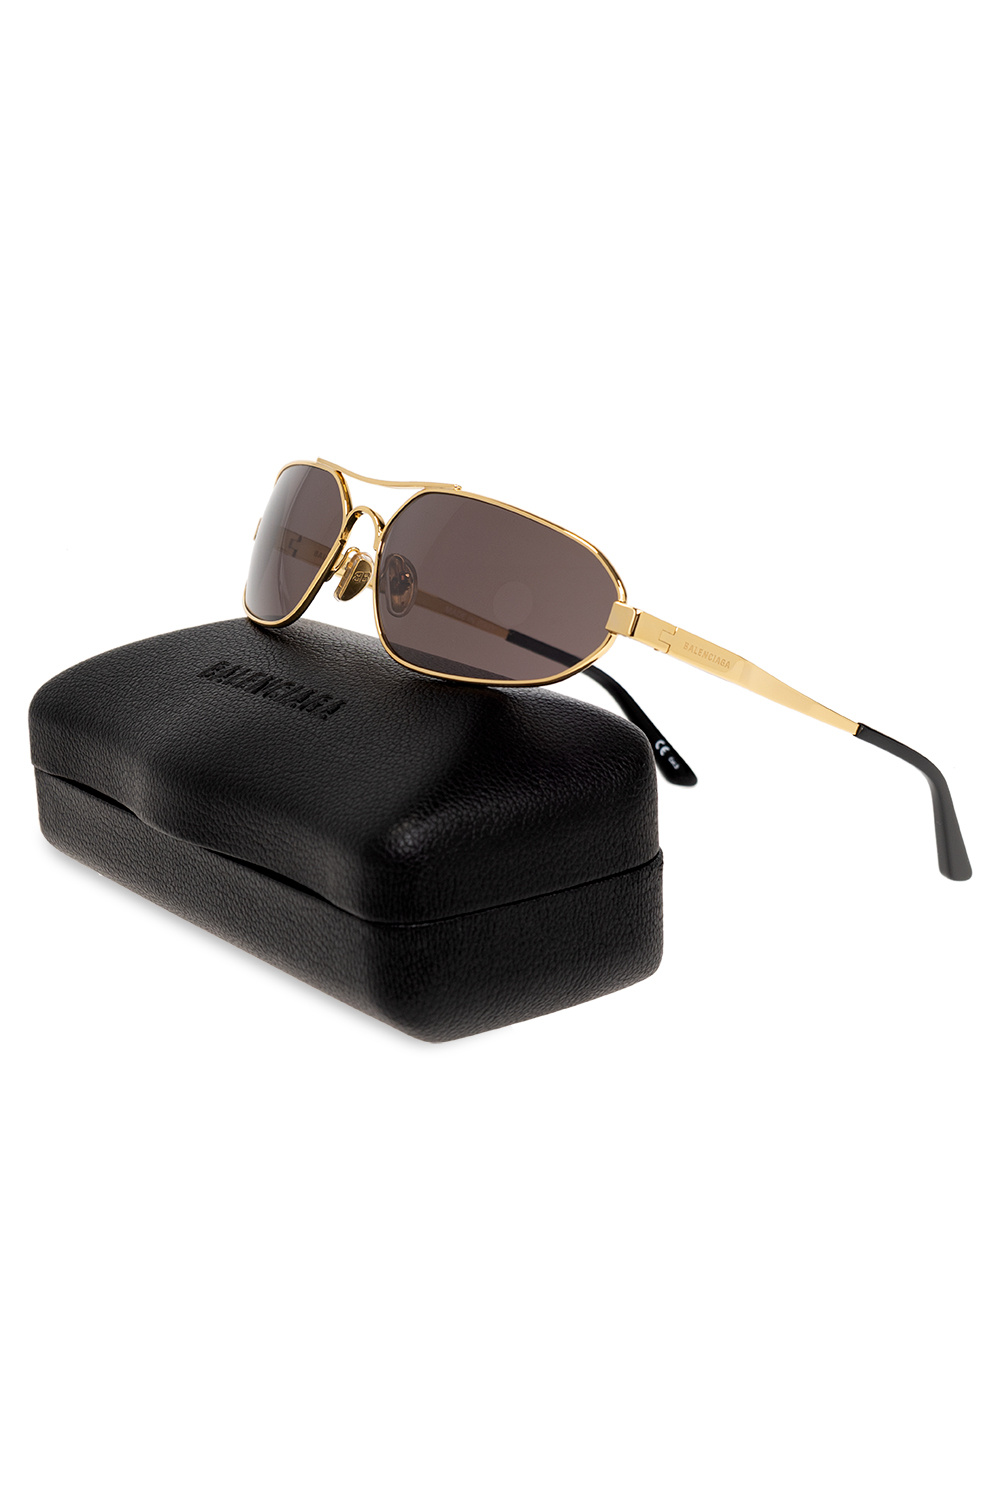 Balenciaga ‘Stretch Oval’ sunglasses